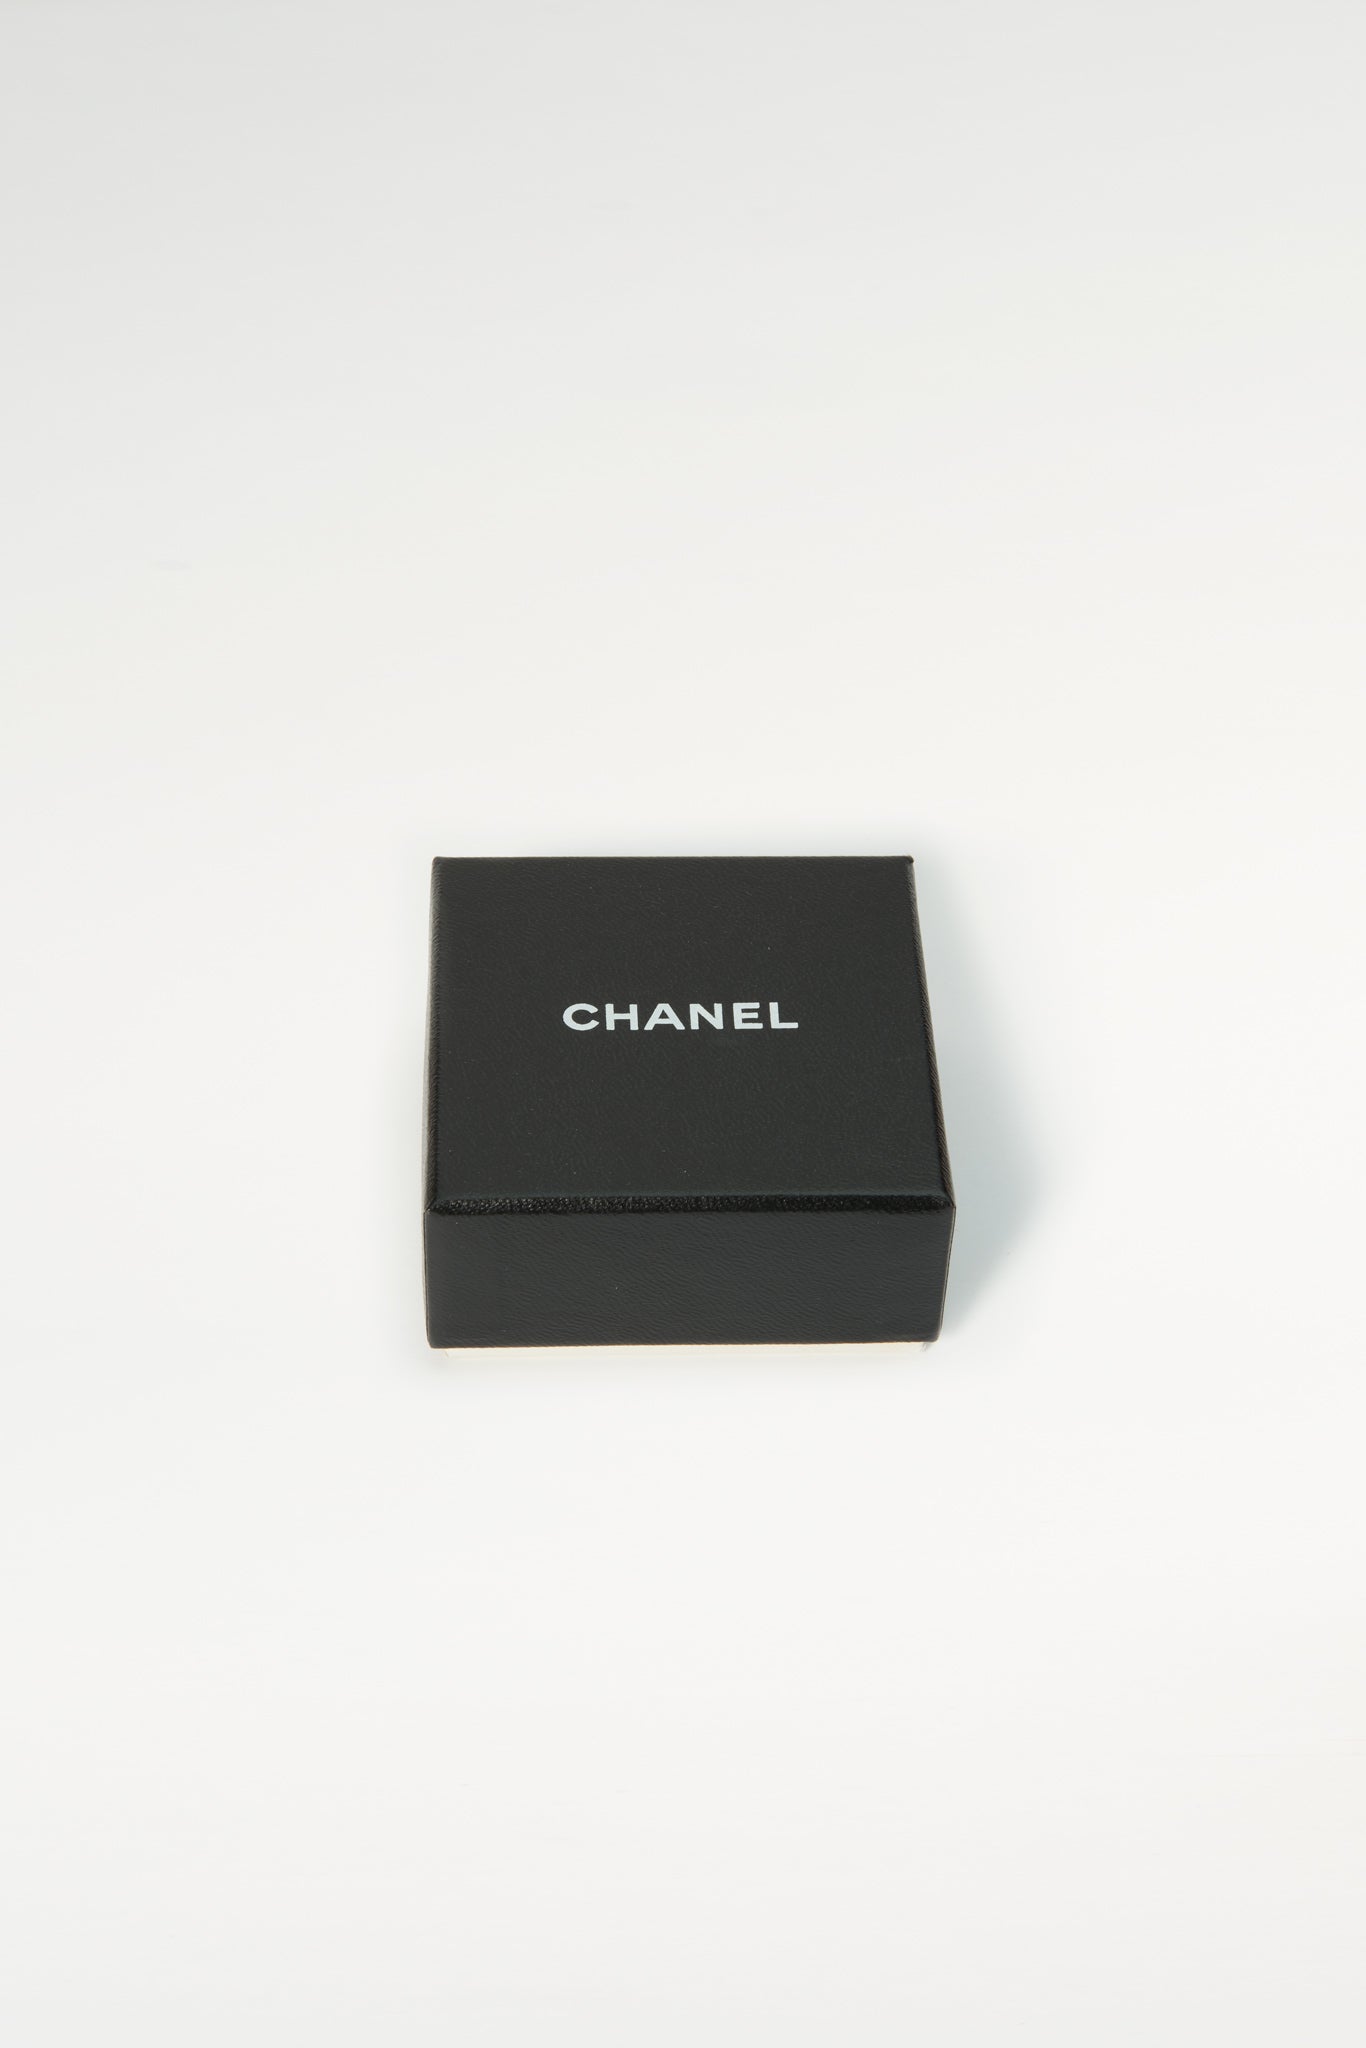 Vintage Chanel CC Earrings